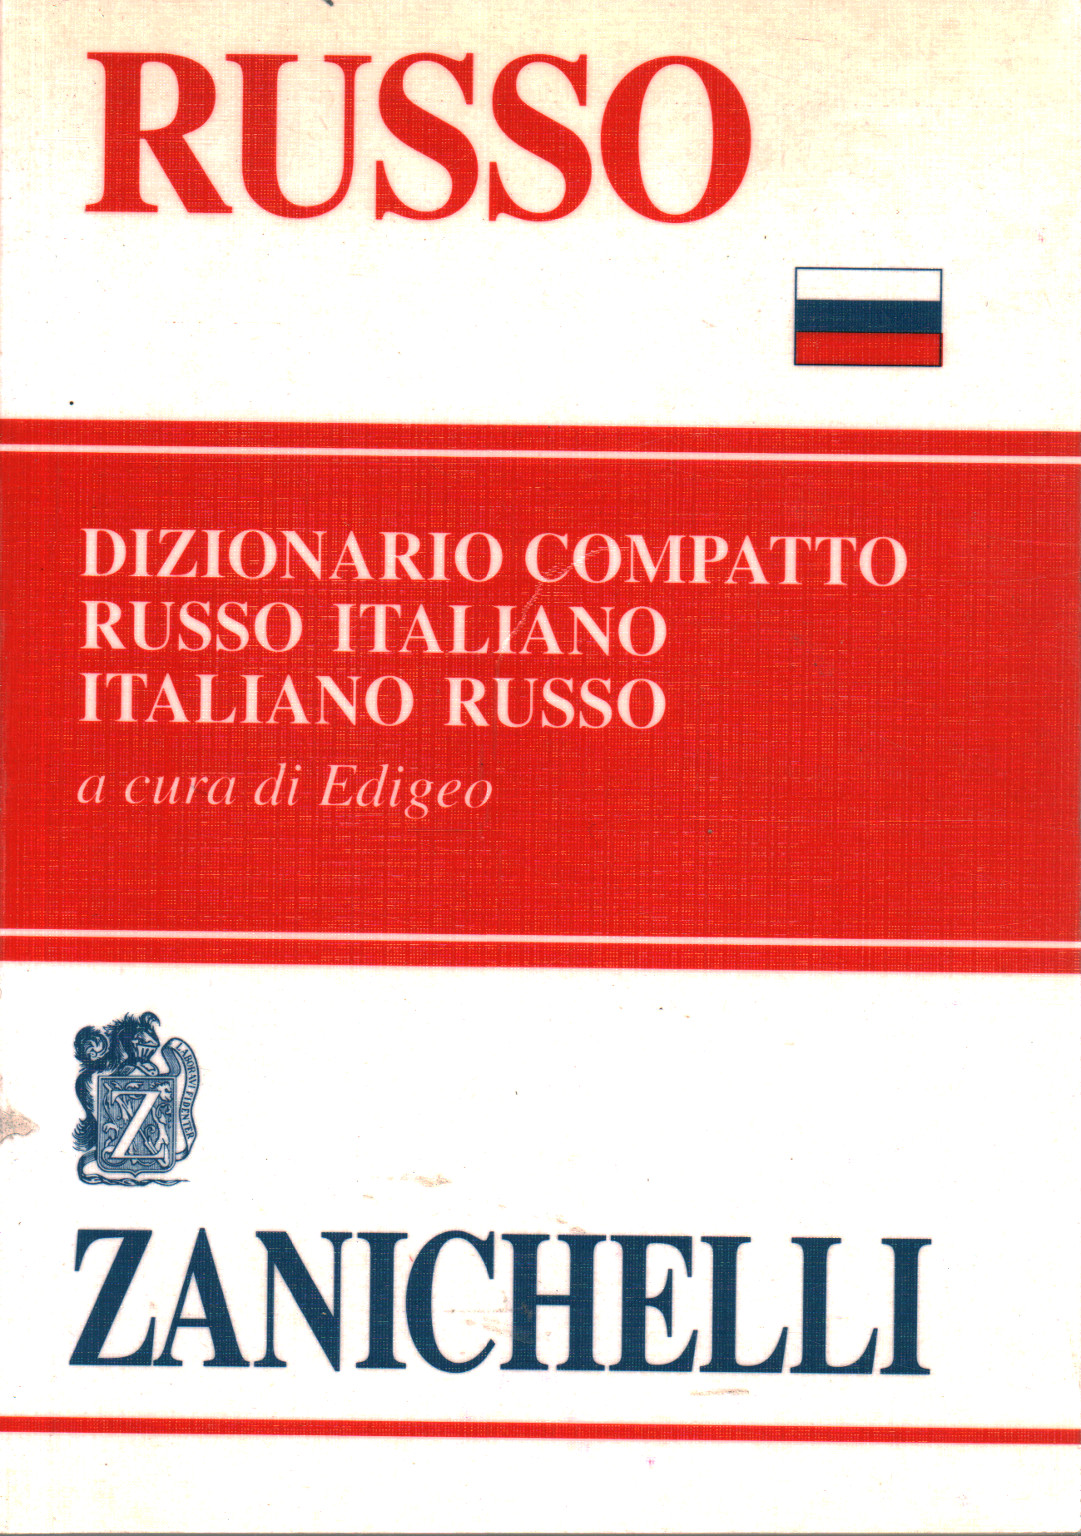 Compact dictionary. Russian Italian Italian Russian, s.a.